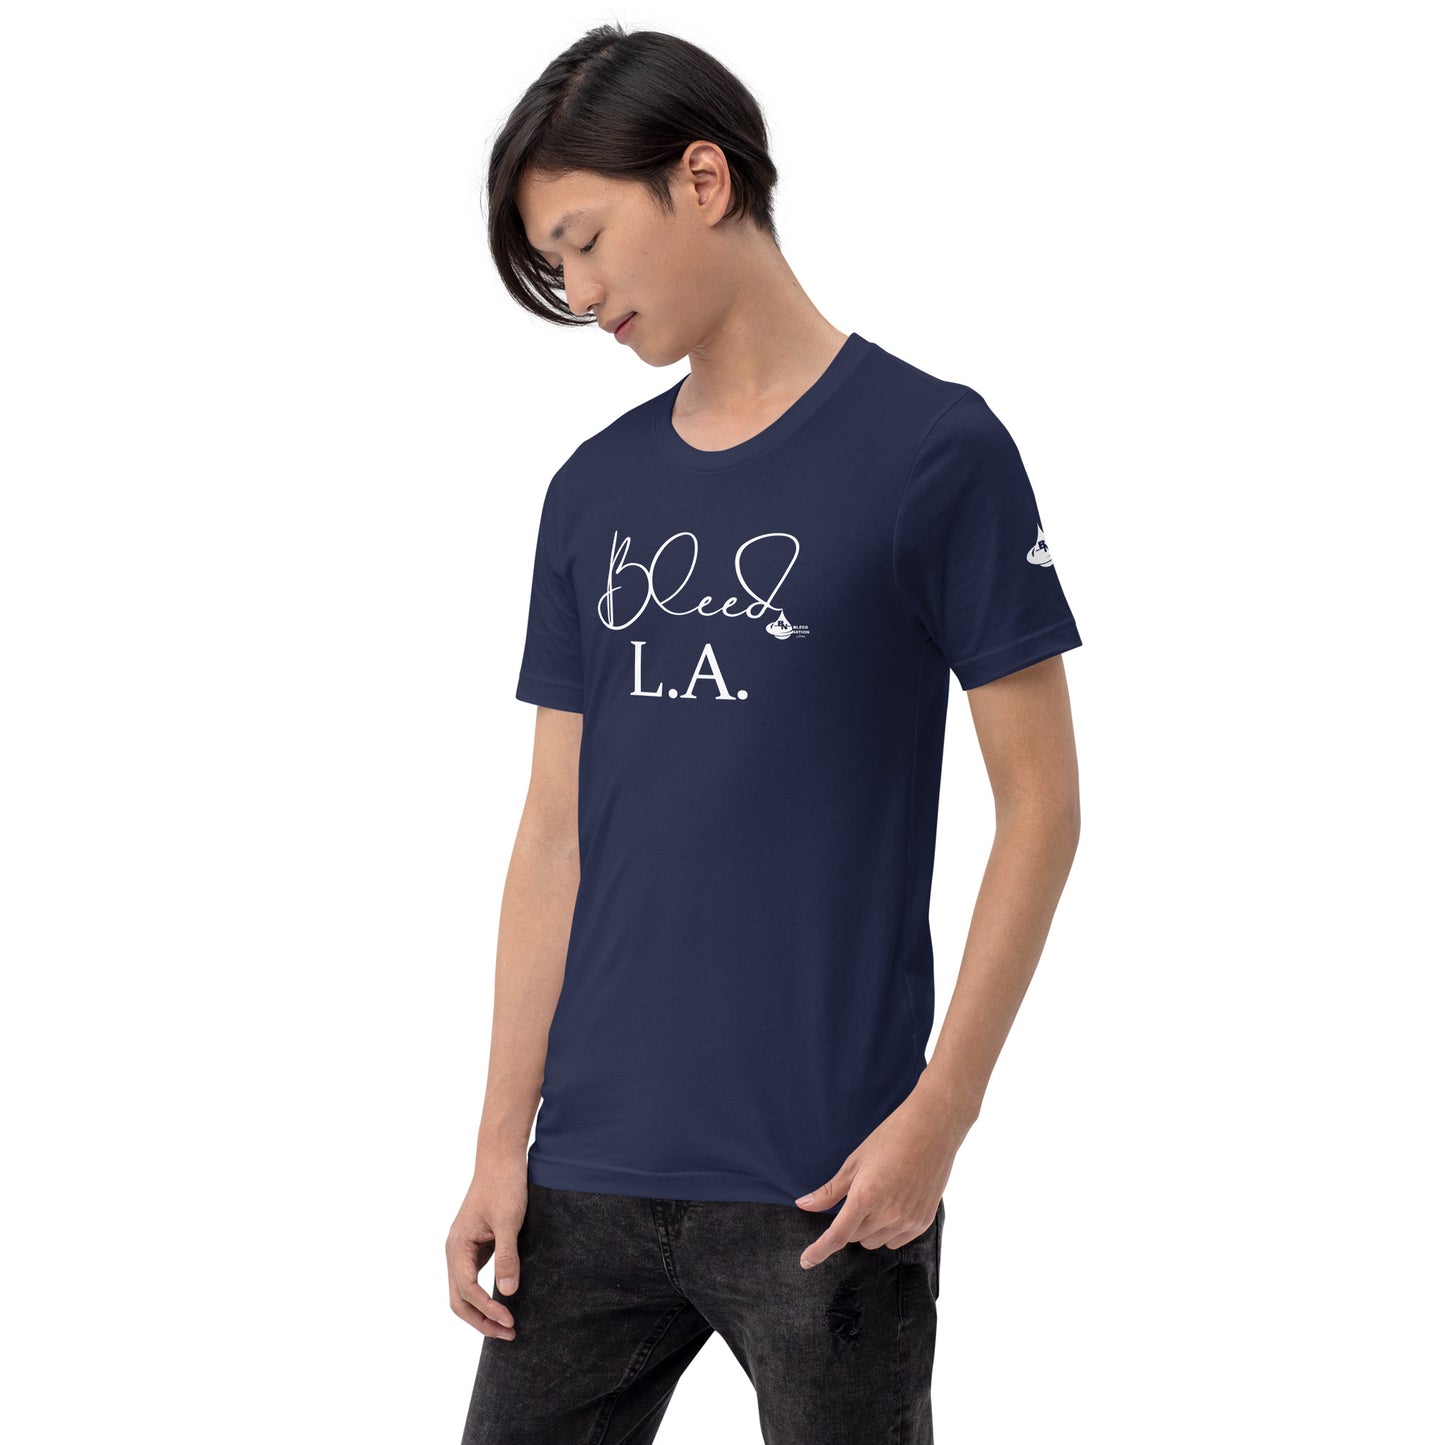 Bleed LA Unisex t-shirt